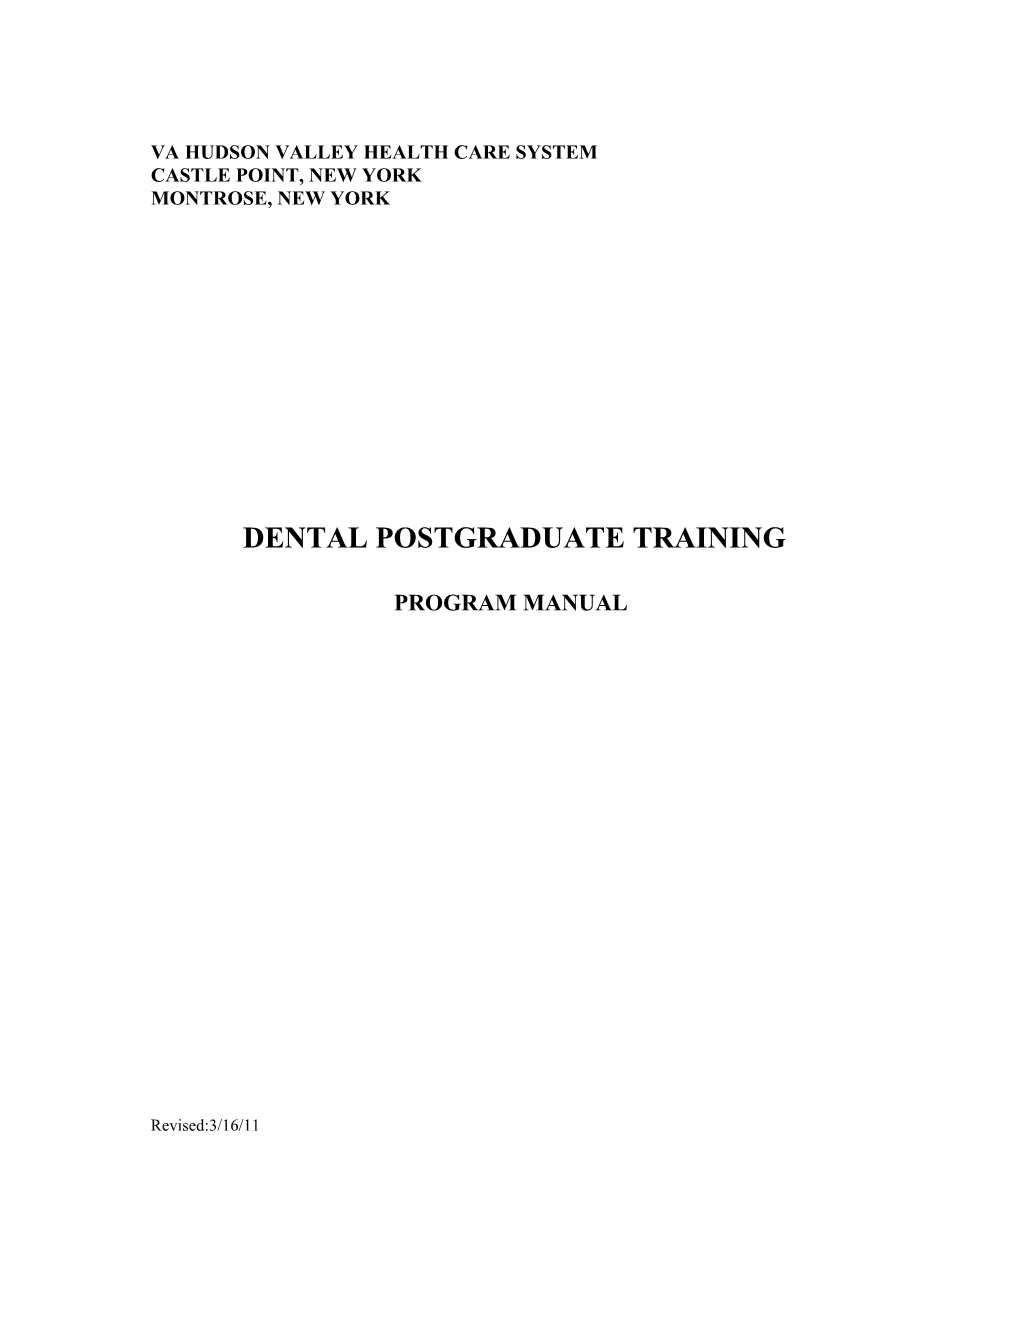 Dental Postgraduate Training Program Manual